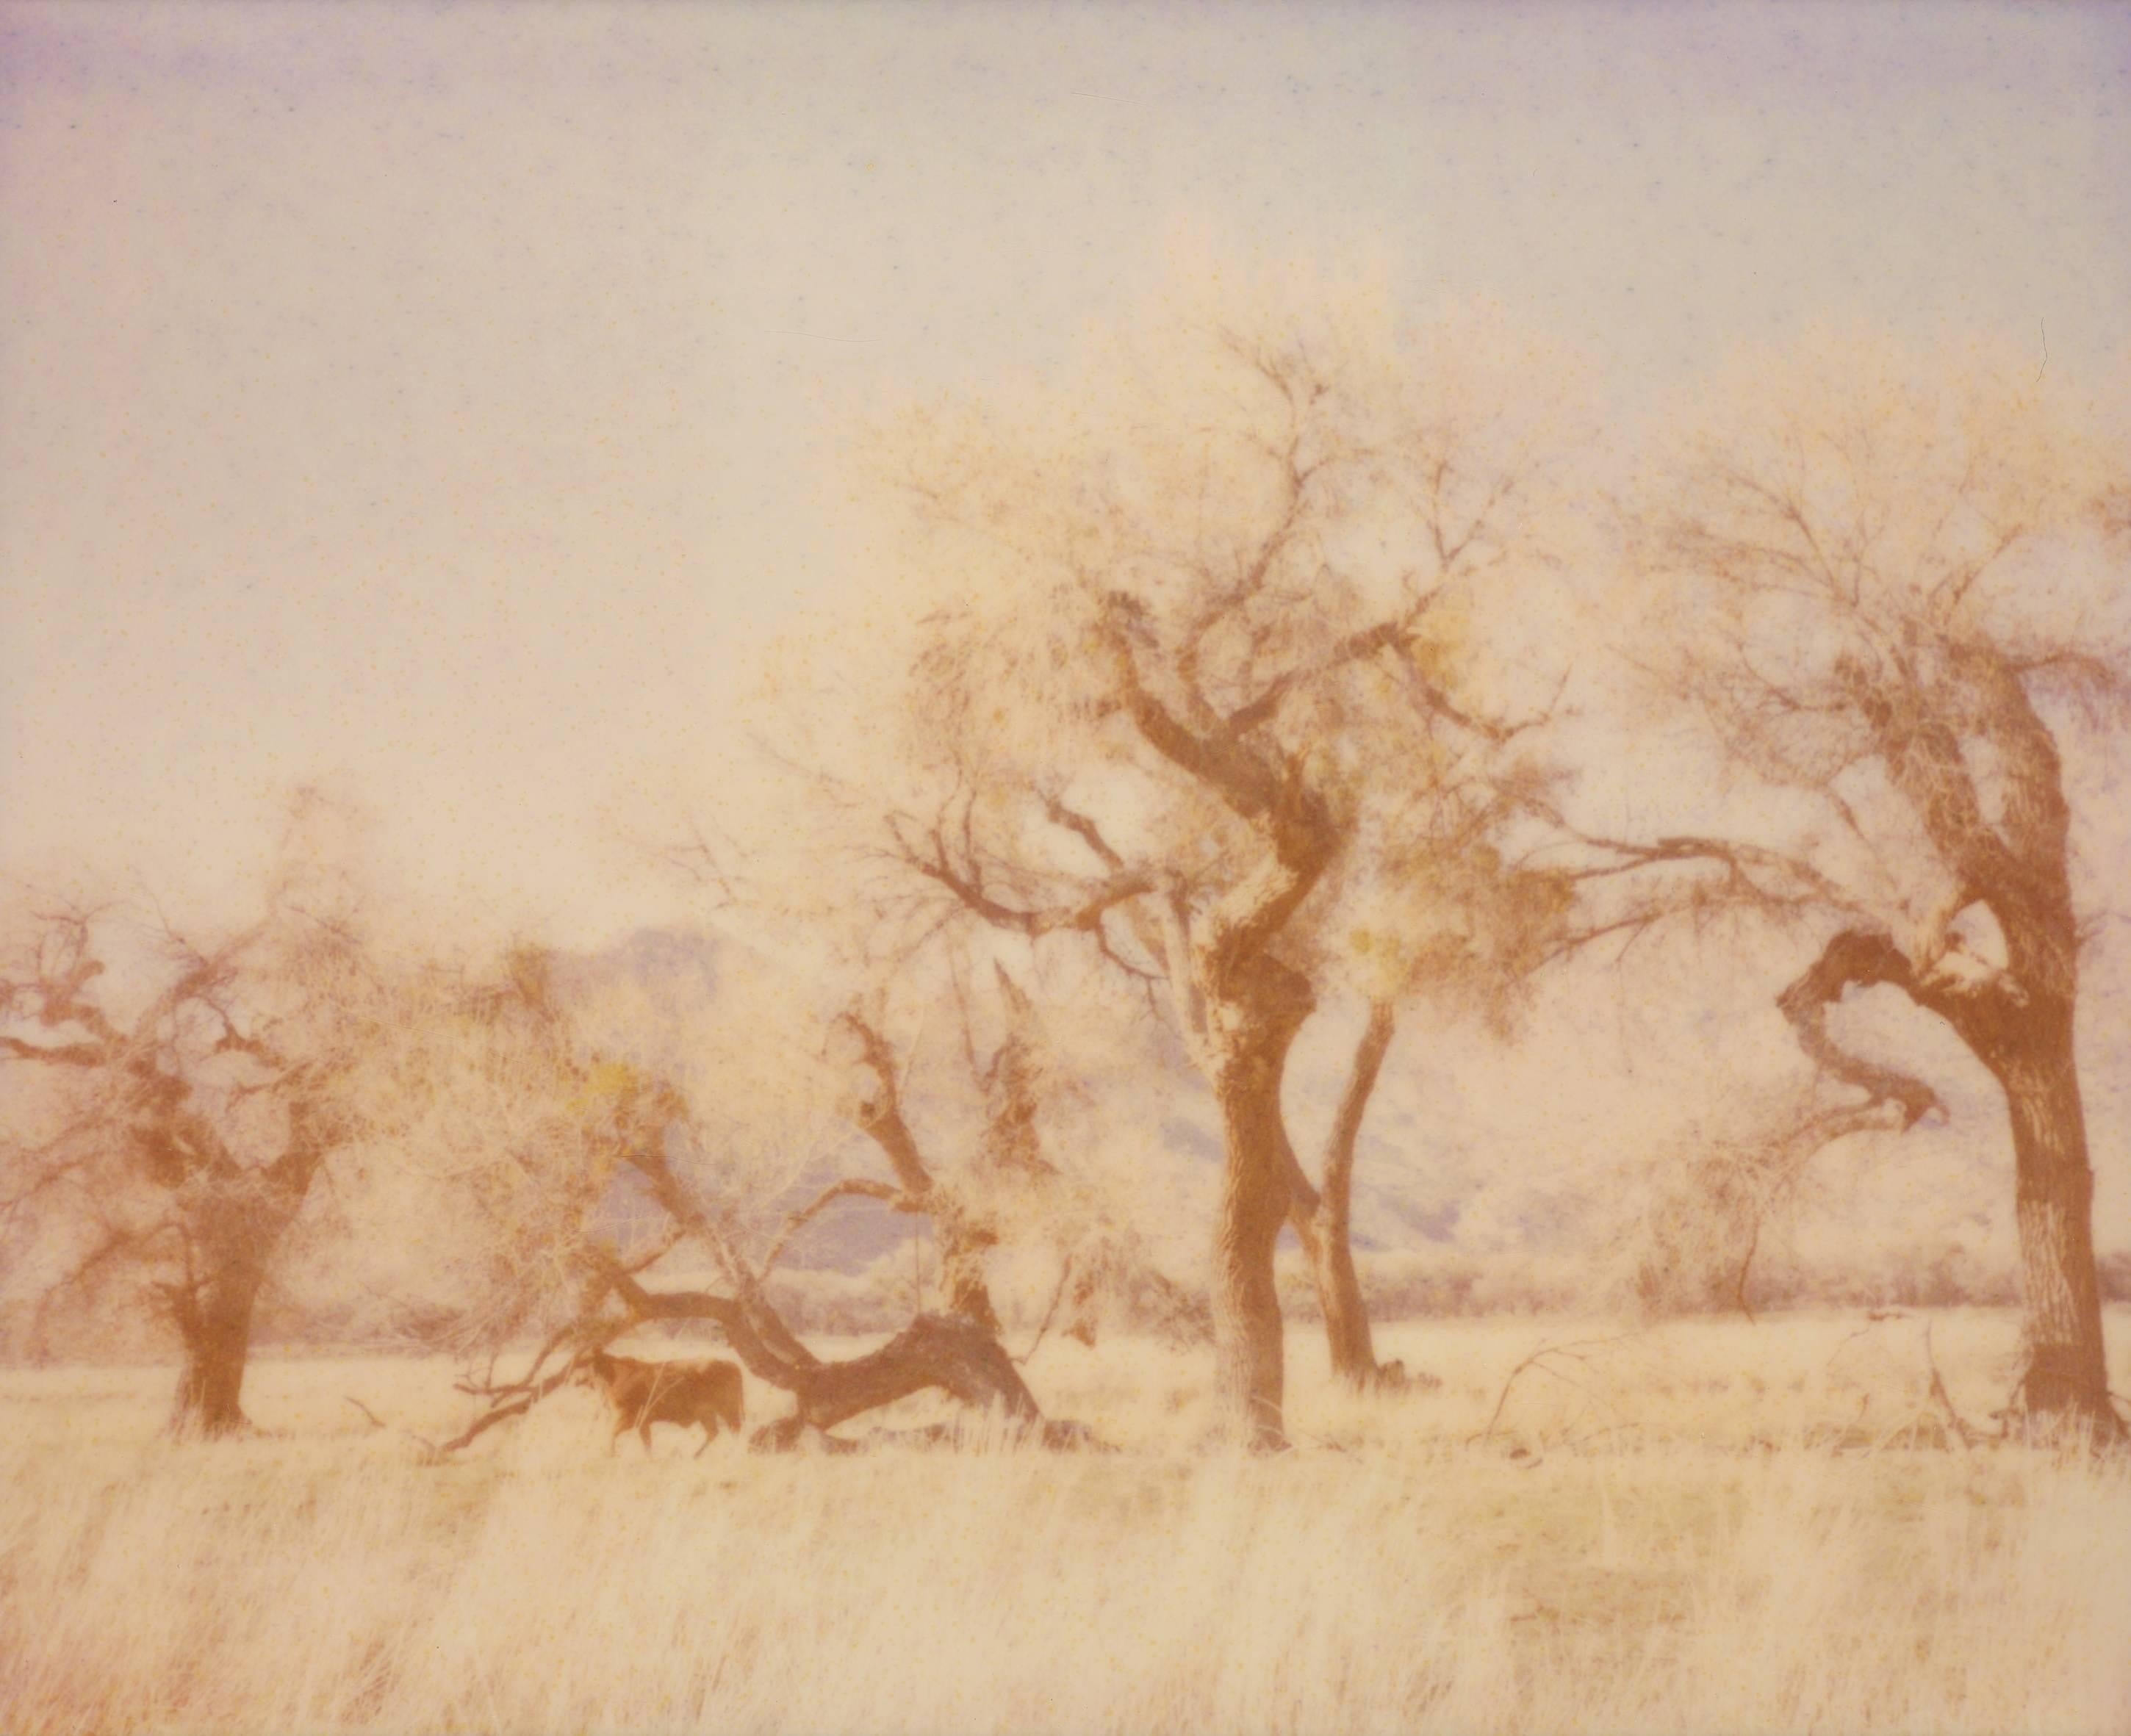 Stefanie Schneider Landscape Photograph - Dreaming of Buffalo - Contemporary, Landscape, USA, Polaroid, photograph